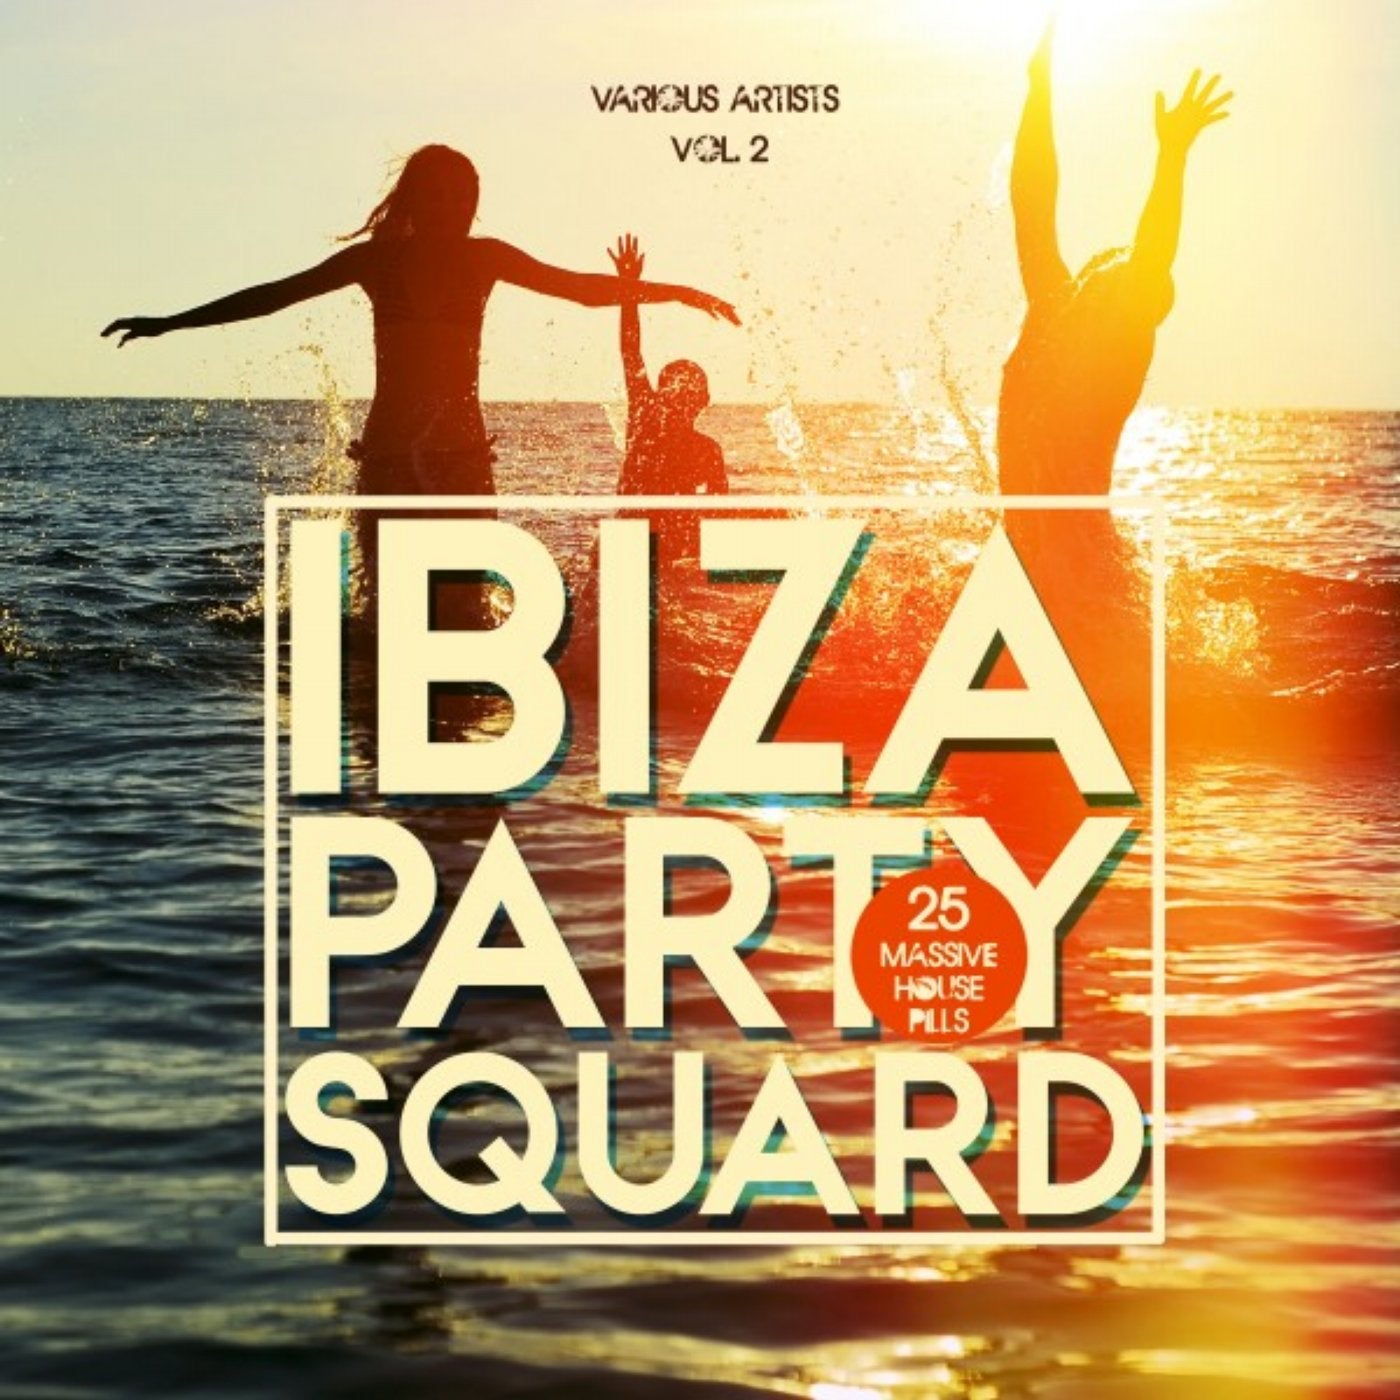 Ibiza Party Squad, Vol. 2 (25 Massive House Pills)